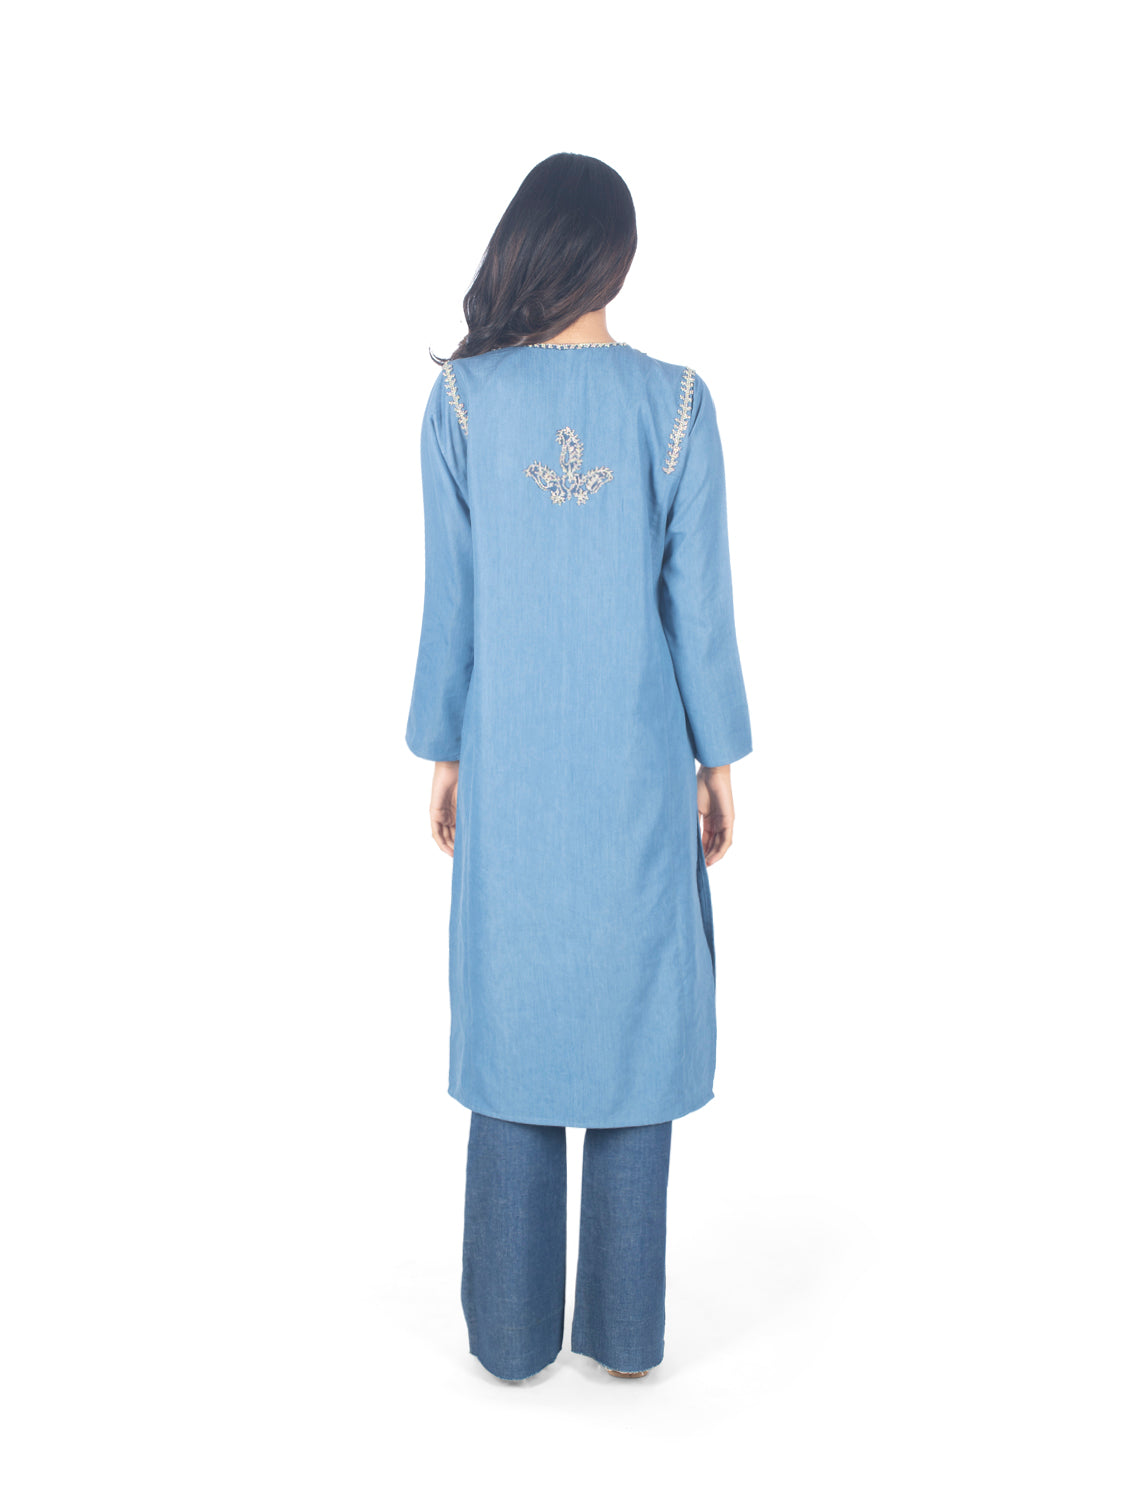 MUFTI Honeycomb Print Mandarin Blue Cotton Full Sleeves Shirt in Mumbai at  best price by Suru The Fashion Shop - Justdial